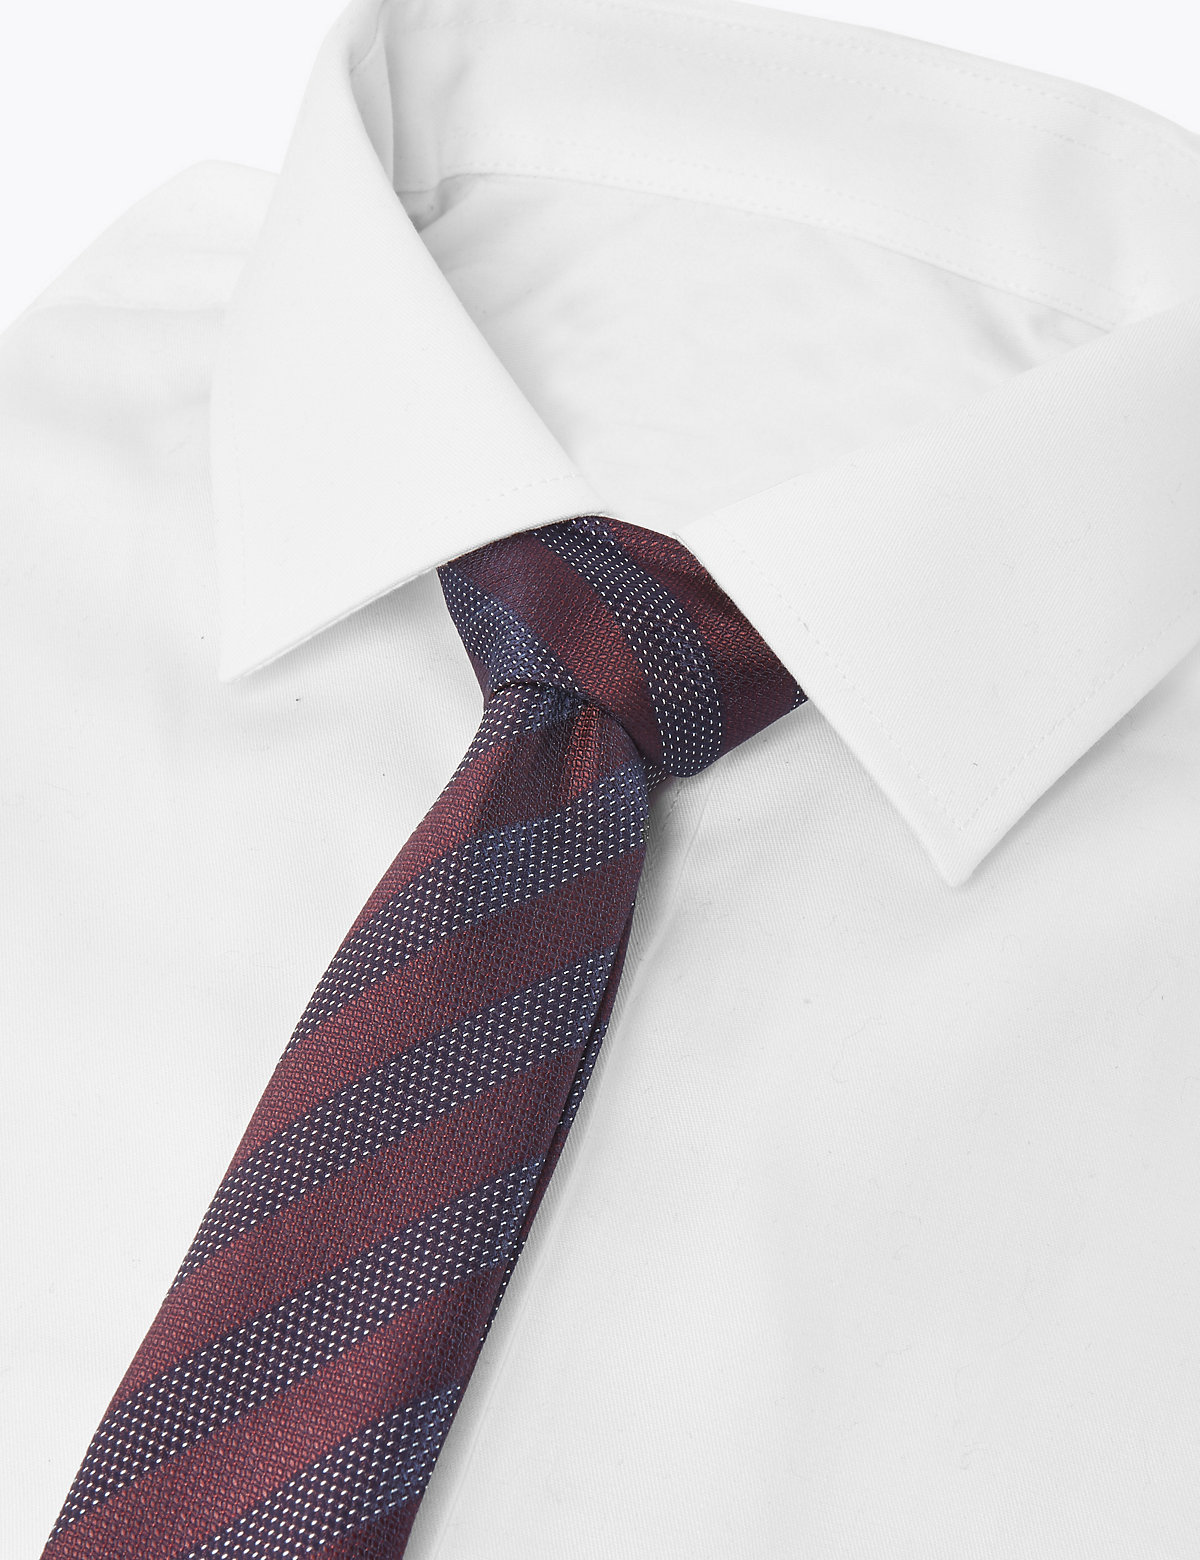 Skinny Striped Tie